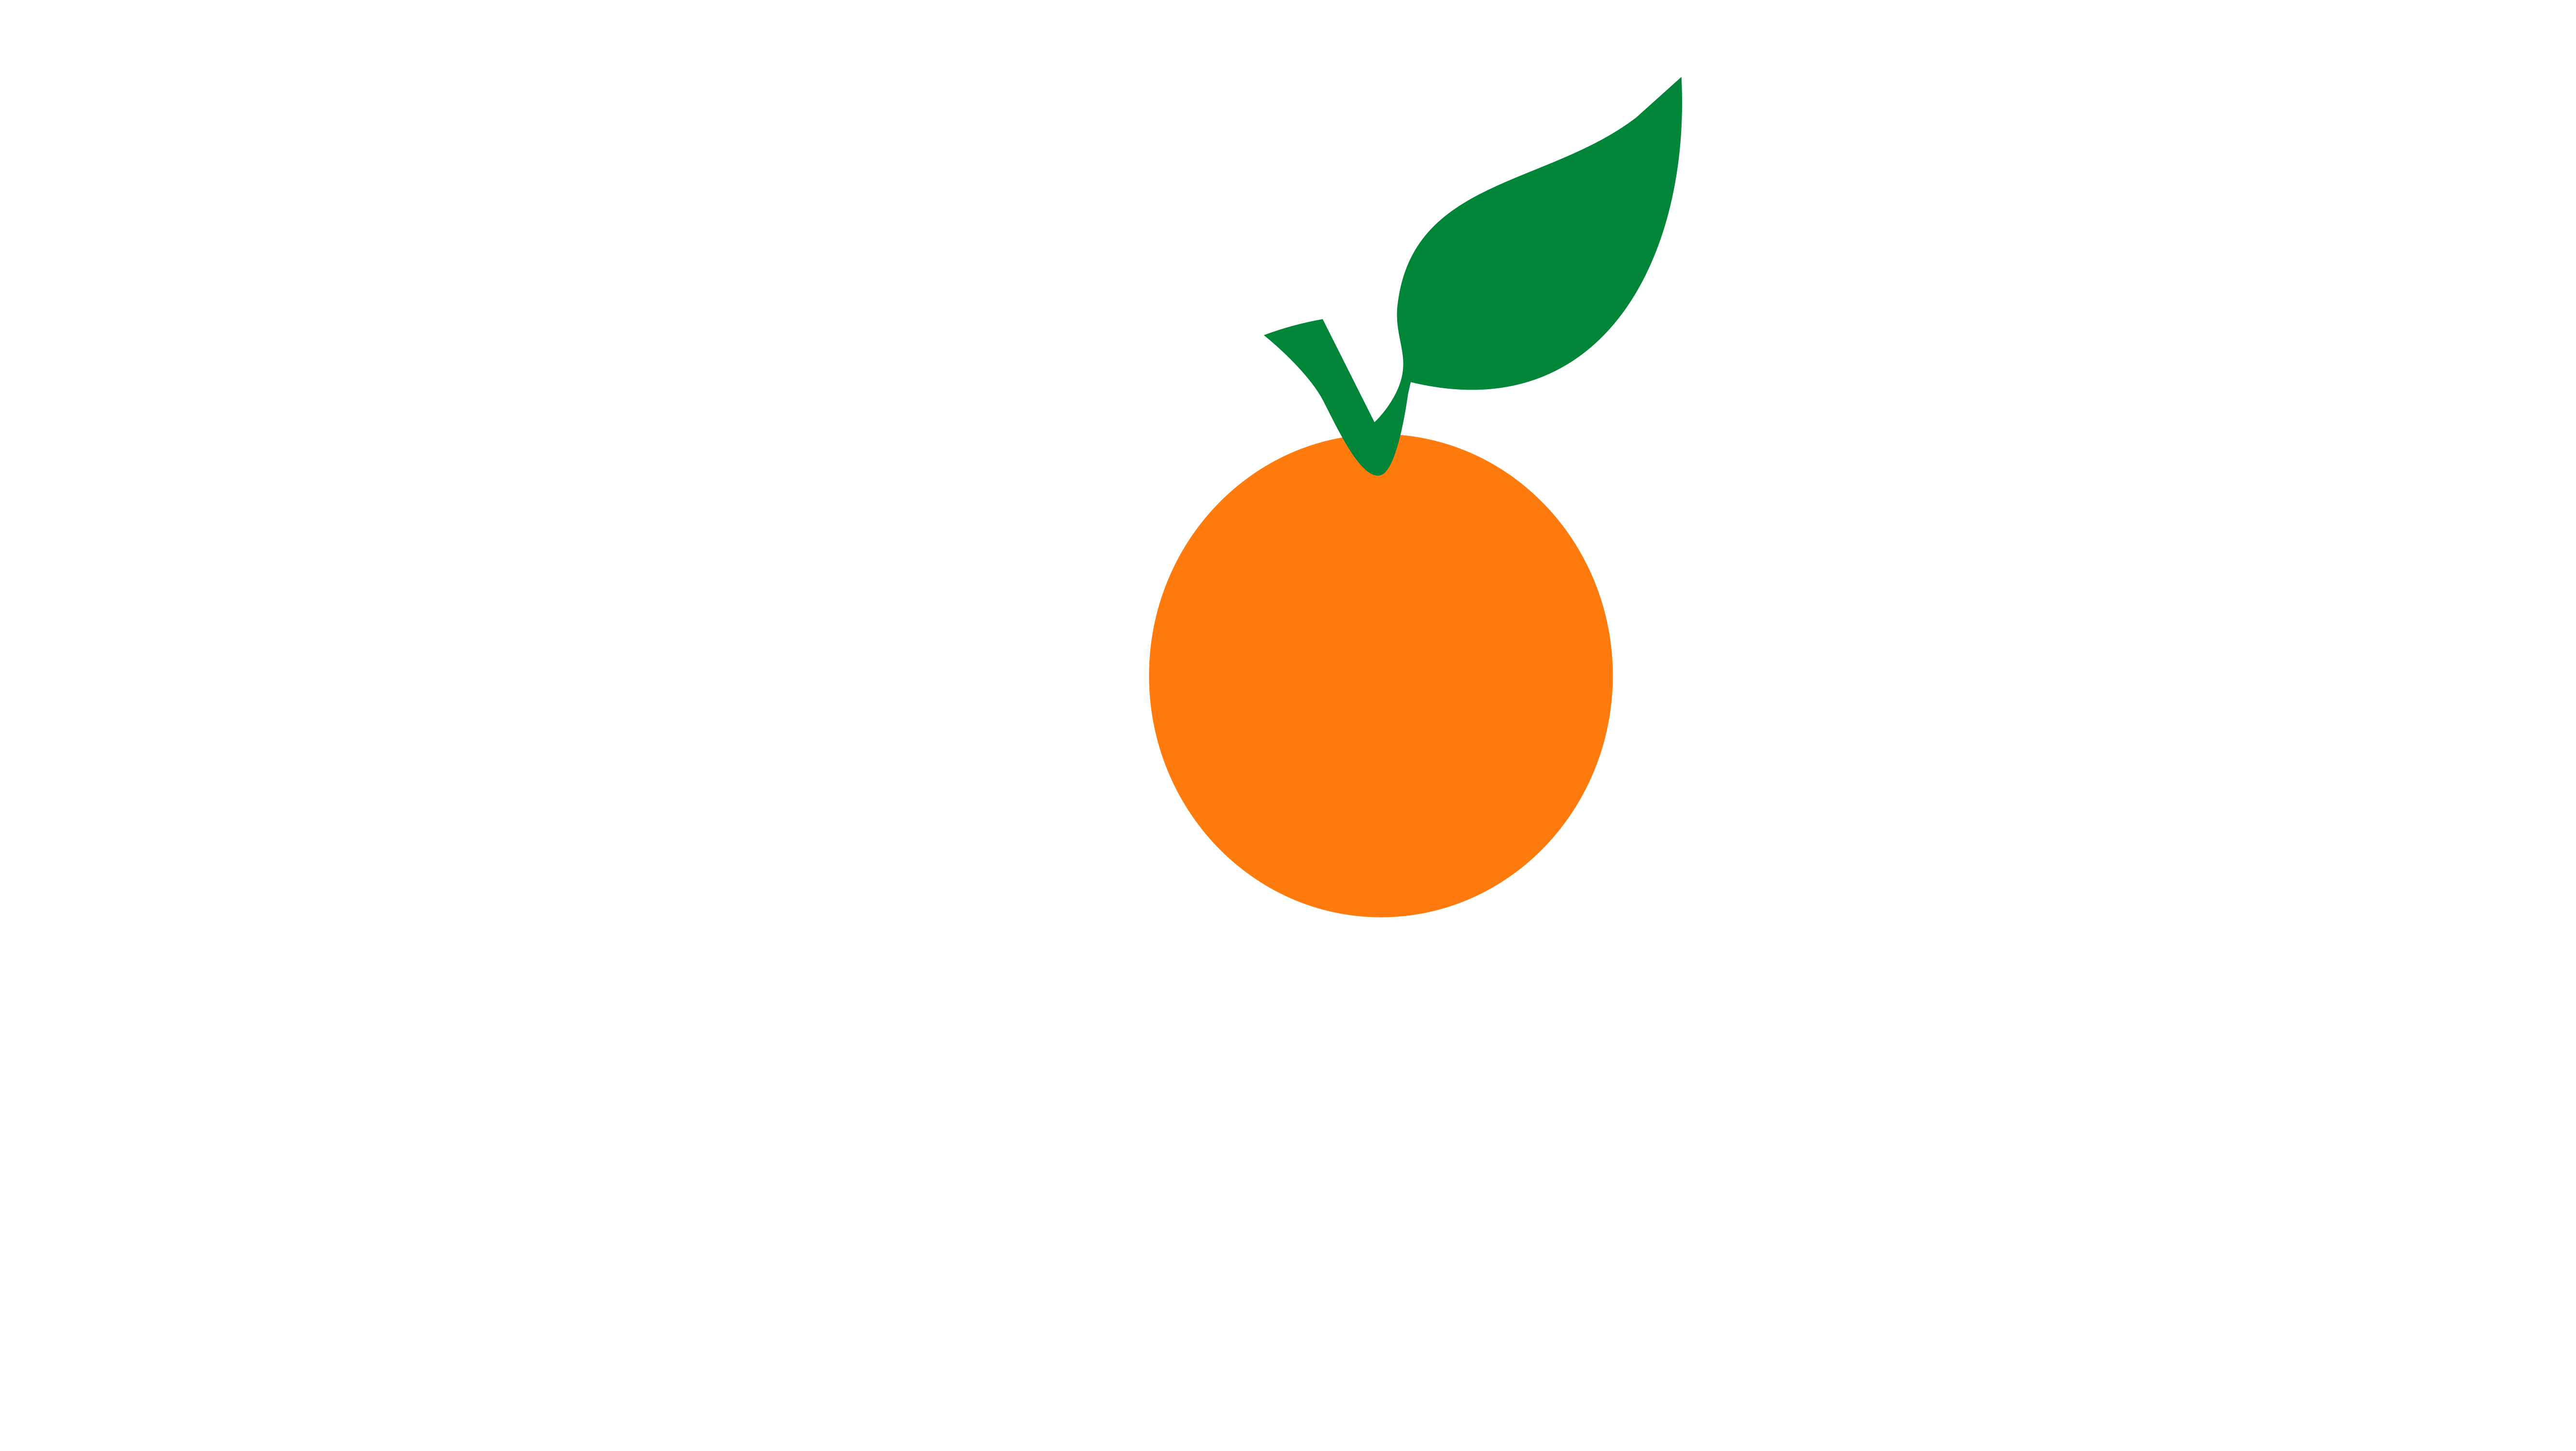 Logotipo ISAU